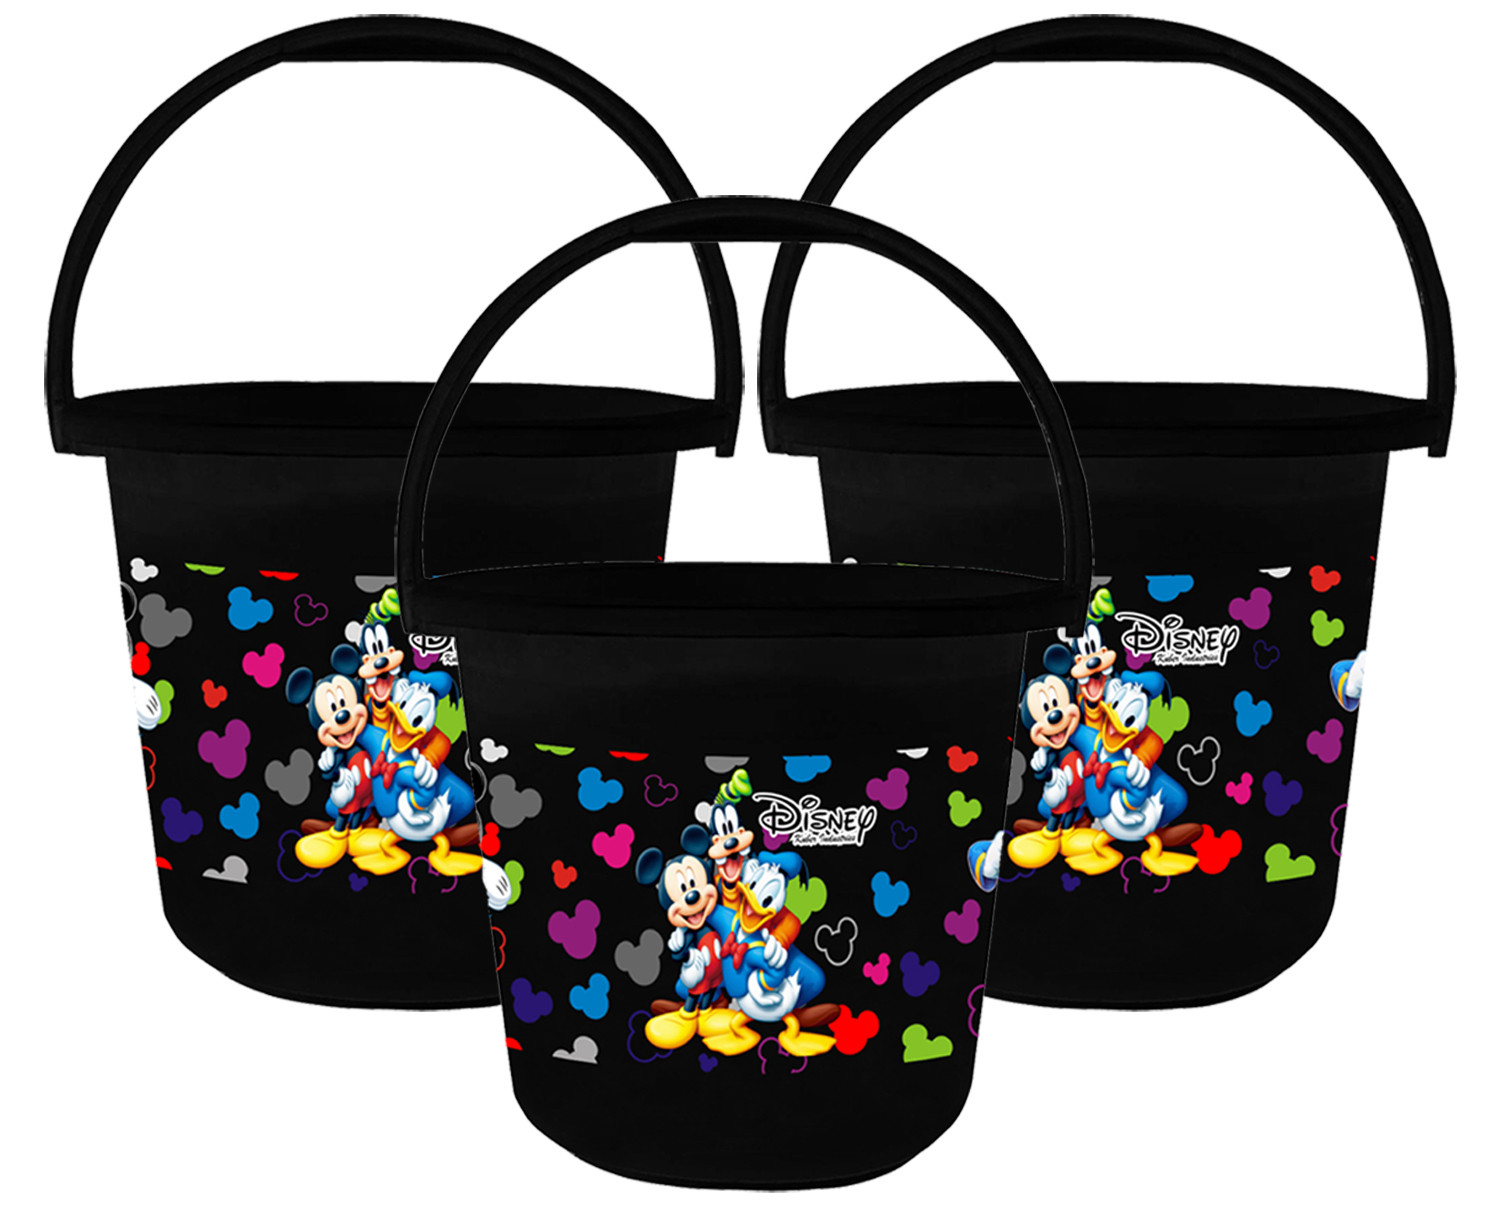 Kuber Industries Disney Team Mickey Print Unbreakable Virgin Plastic Strong Bathroom Bucket ,16 LTR (Black) -HS_35_KUBMART17395